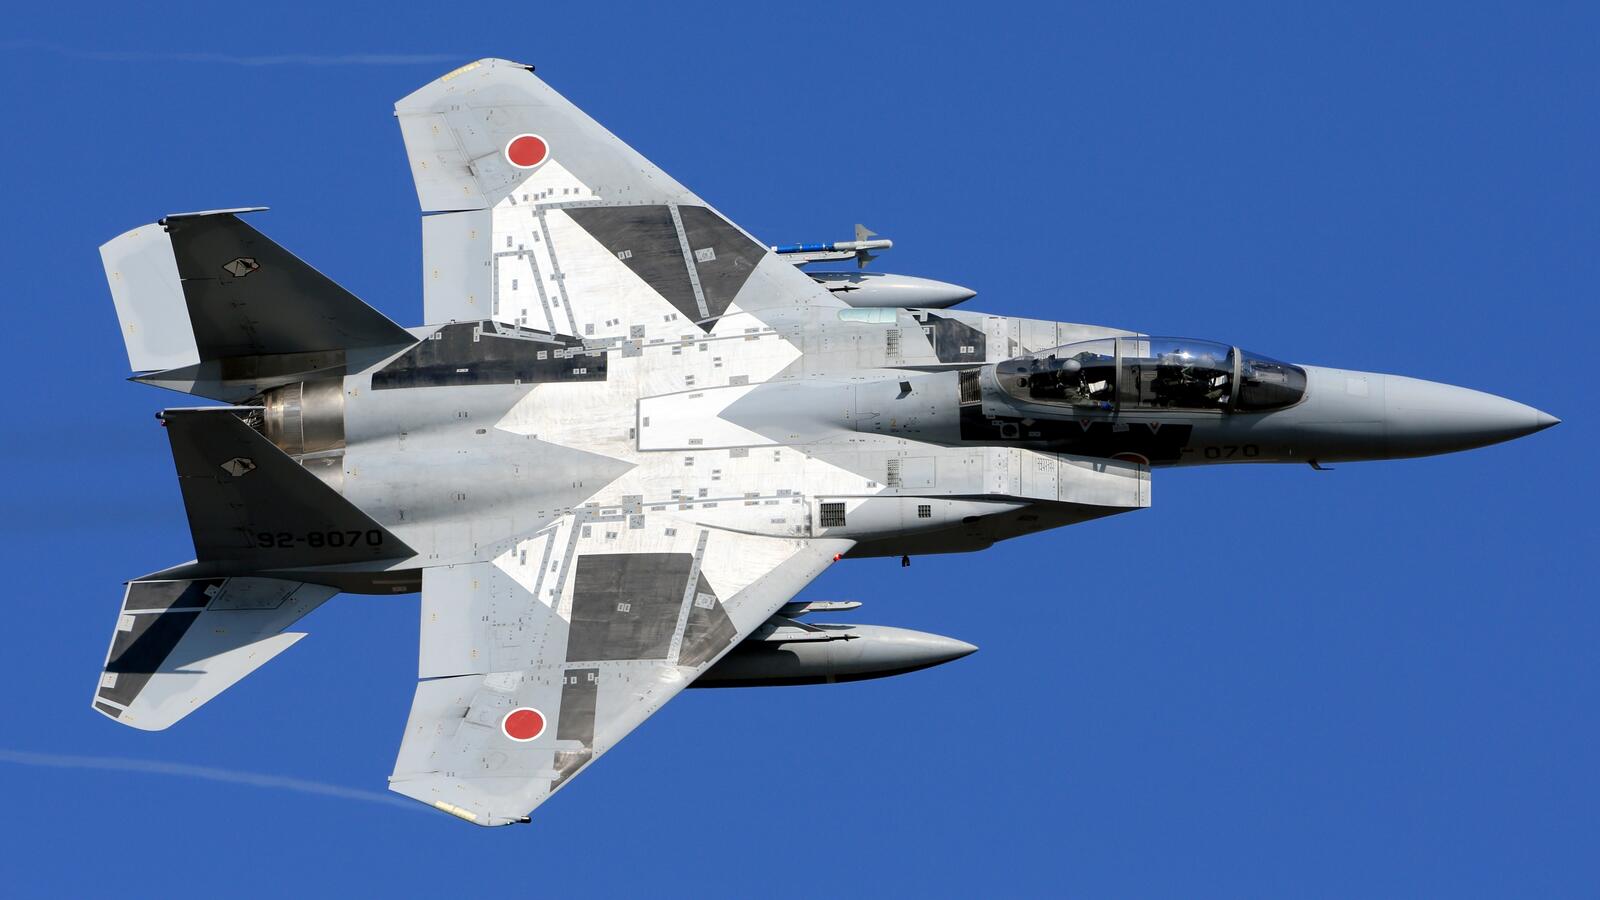 Бесплатное фото Самолет mitsubishi f-15j в полете